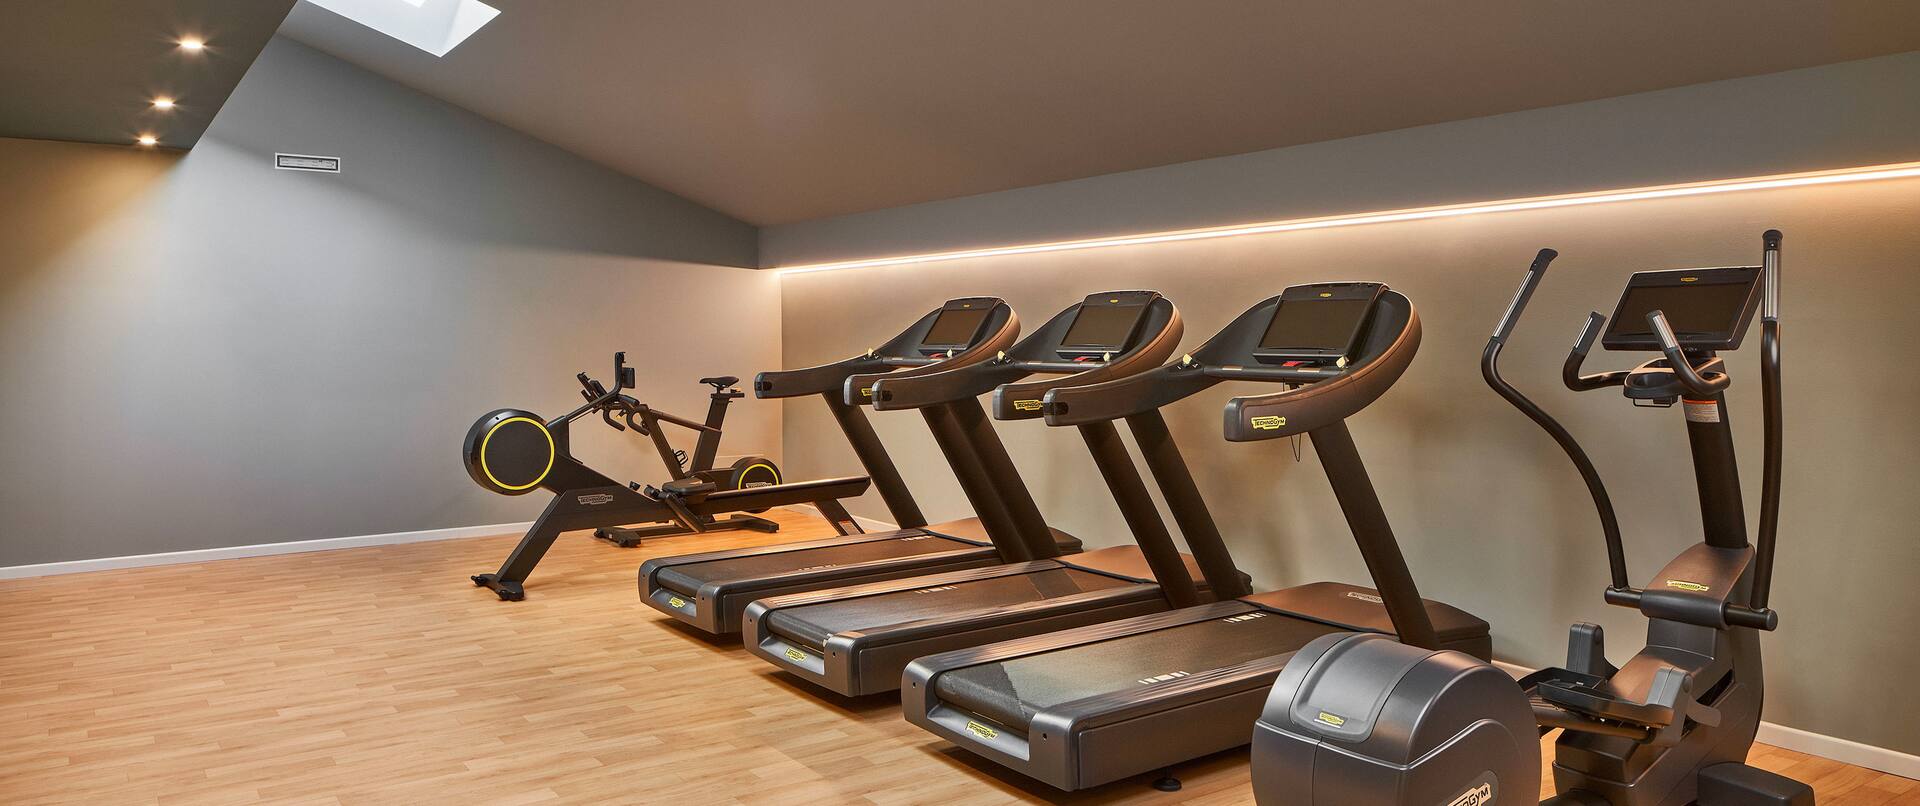 treadmills in a fitness room